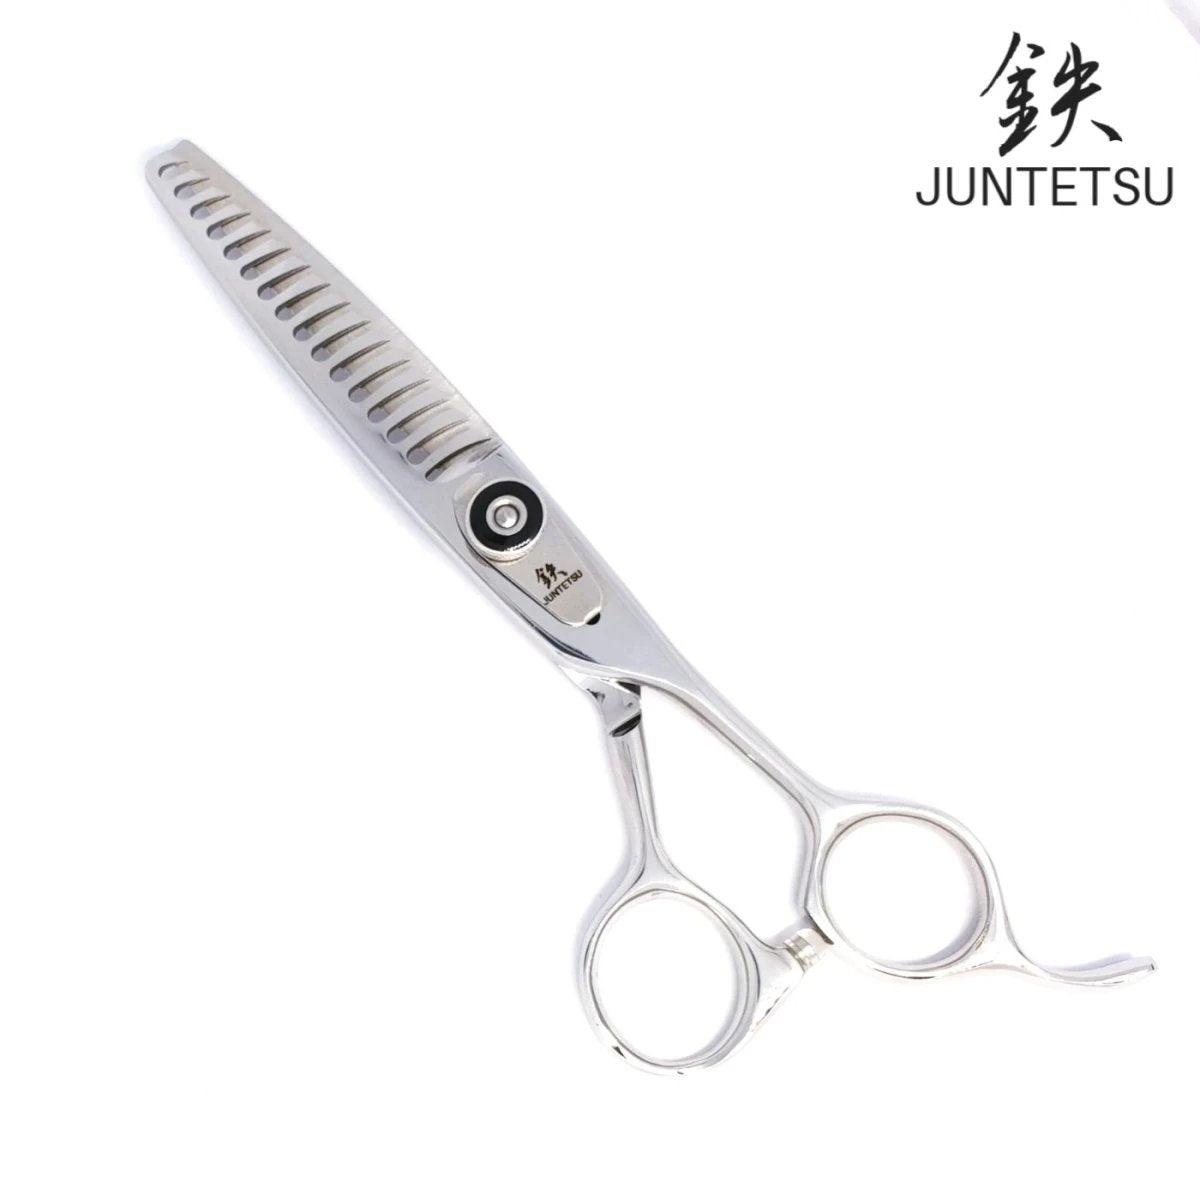 Juntetsu Chomper 16 Teeth Thinning Scissors - Japan Scissors